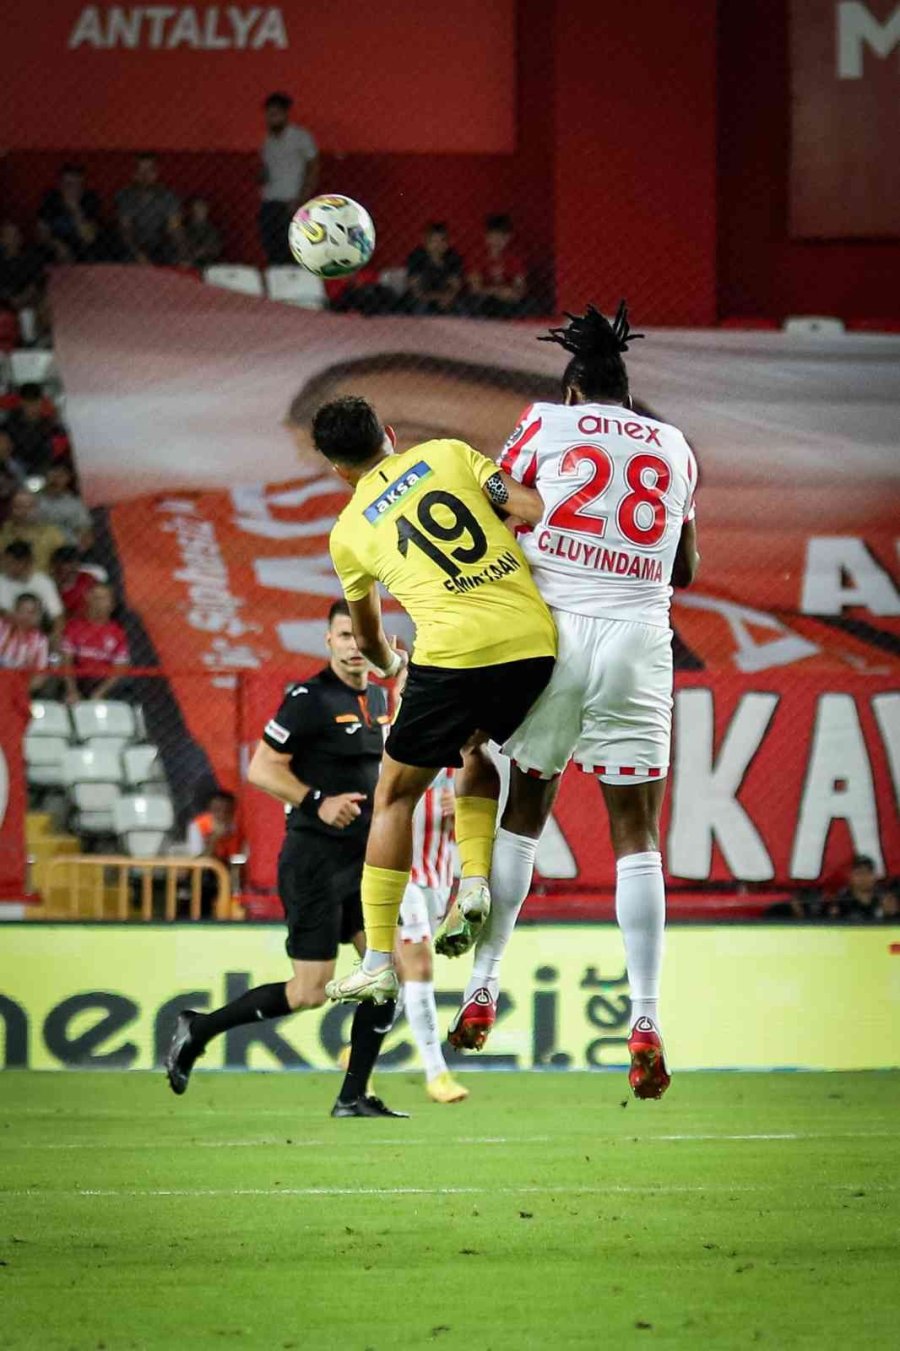 Spor Toto Süper Lig: Fta Antalyaspor: 1 - İstanbulspor: 1 (ilk Yarı)